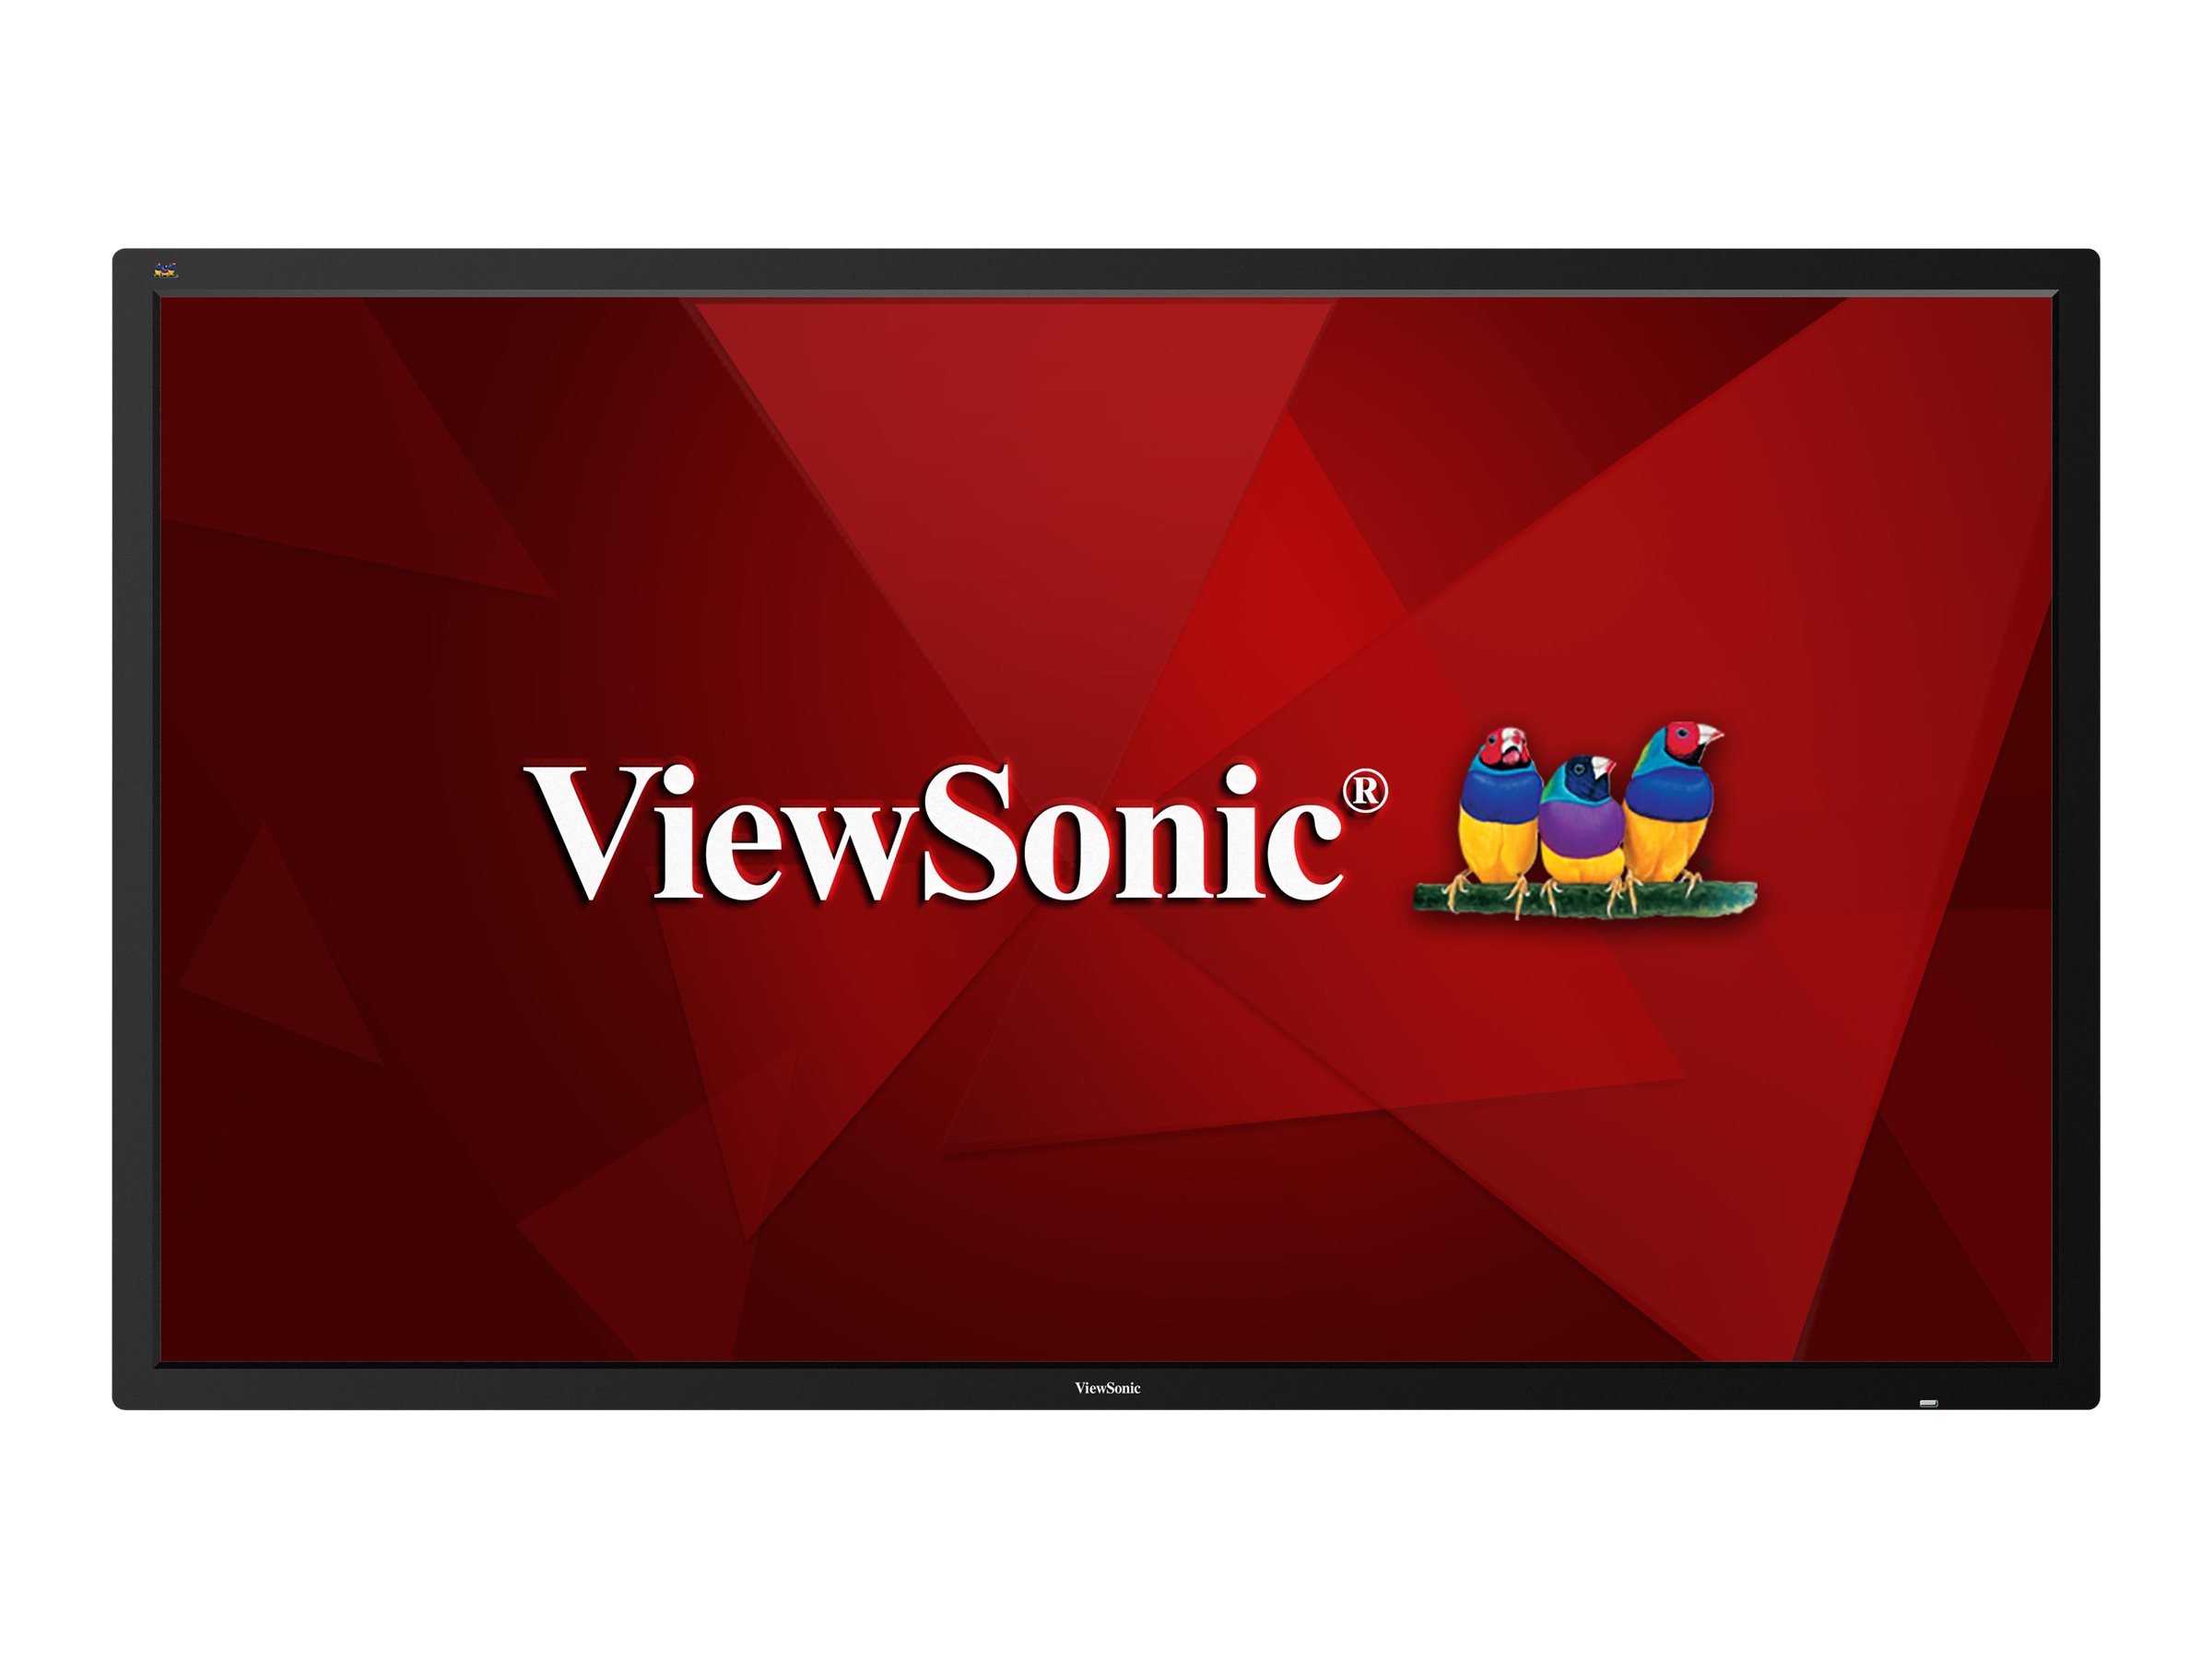 ViewSonic CDE8630 - 218 cm (86") Diagonalklasse CDE30 Series LCD-Display mit LED-Hintergrundbeleuchtung - Digital Signage - Android - 4K UHD (2160p)